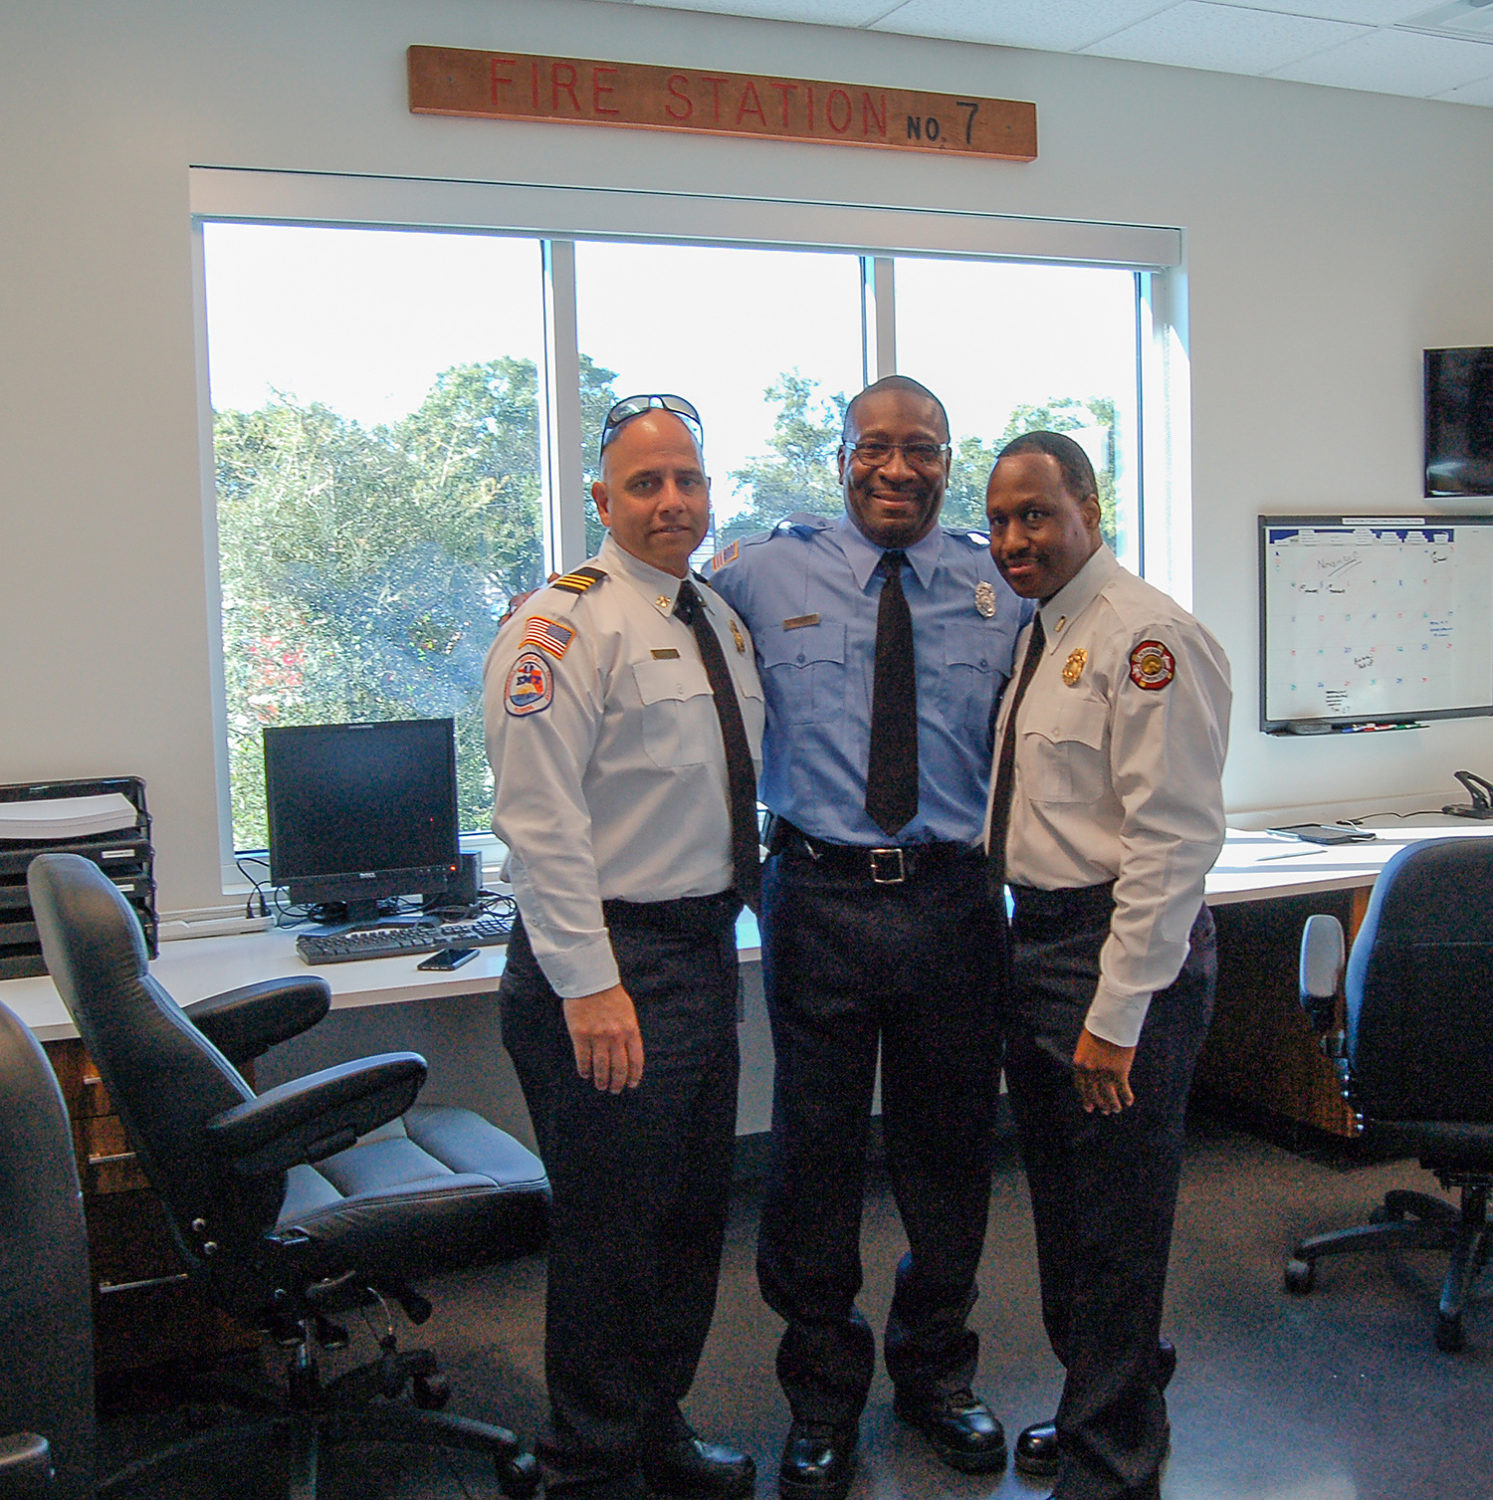 Fire Station Staff